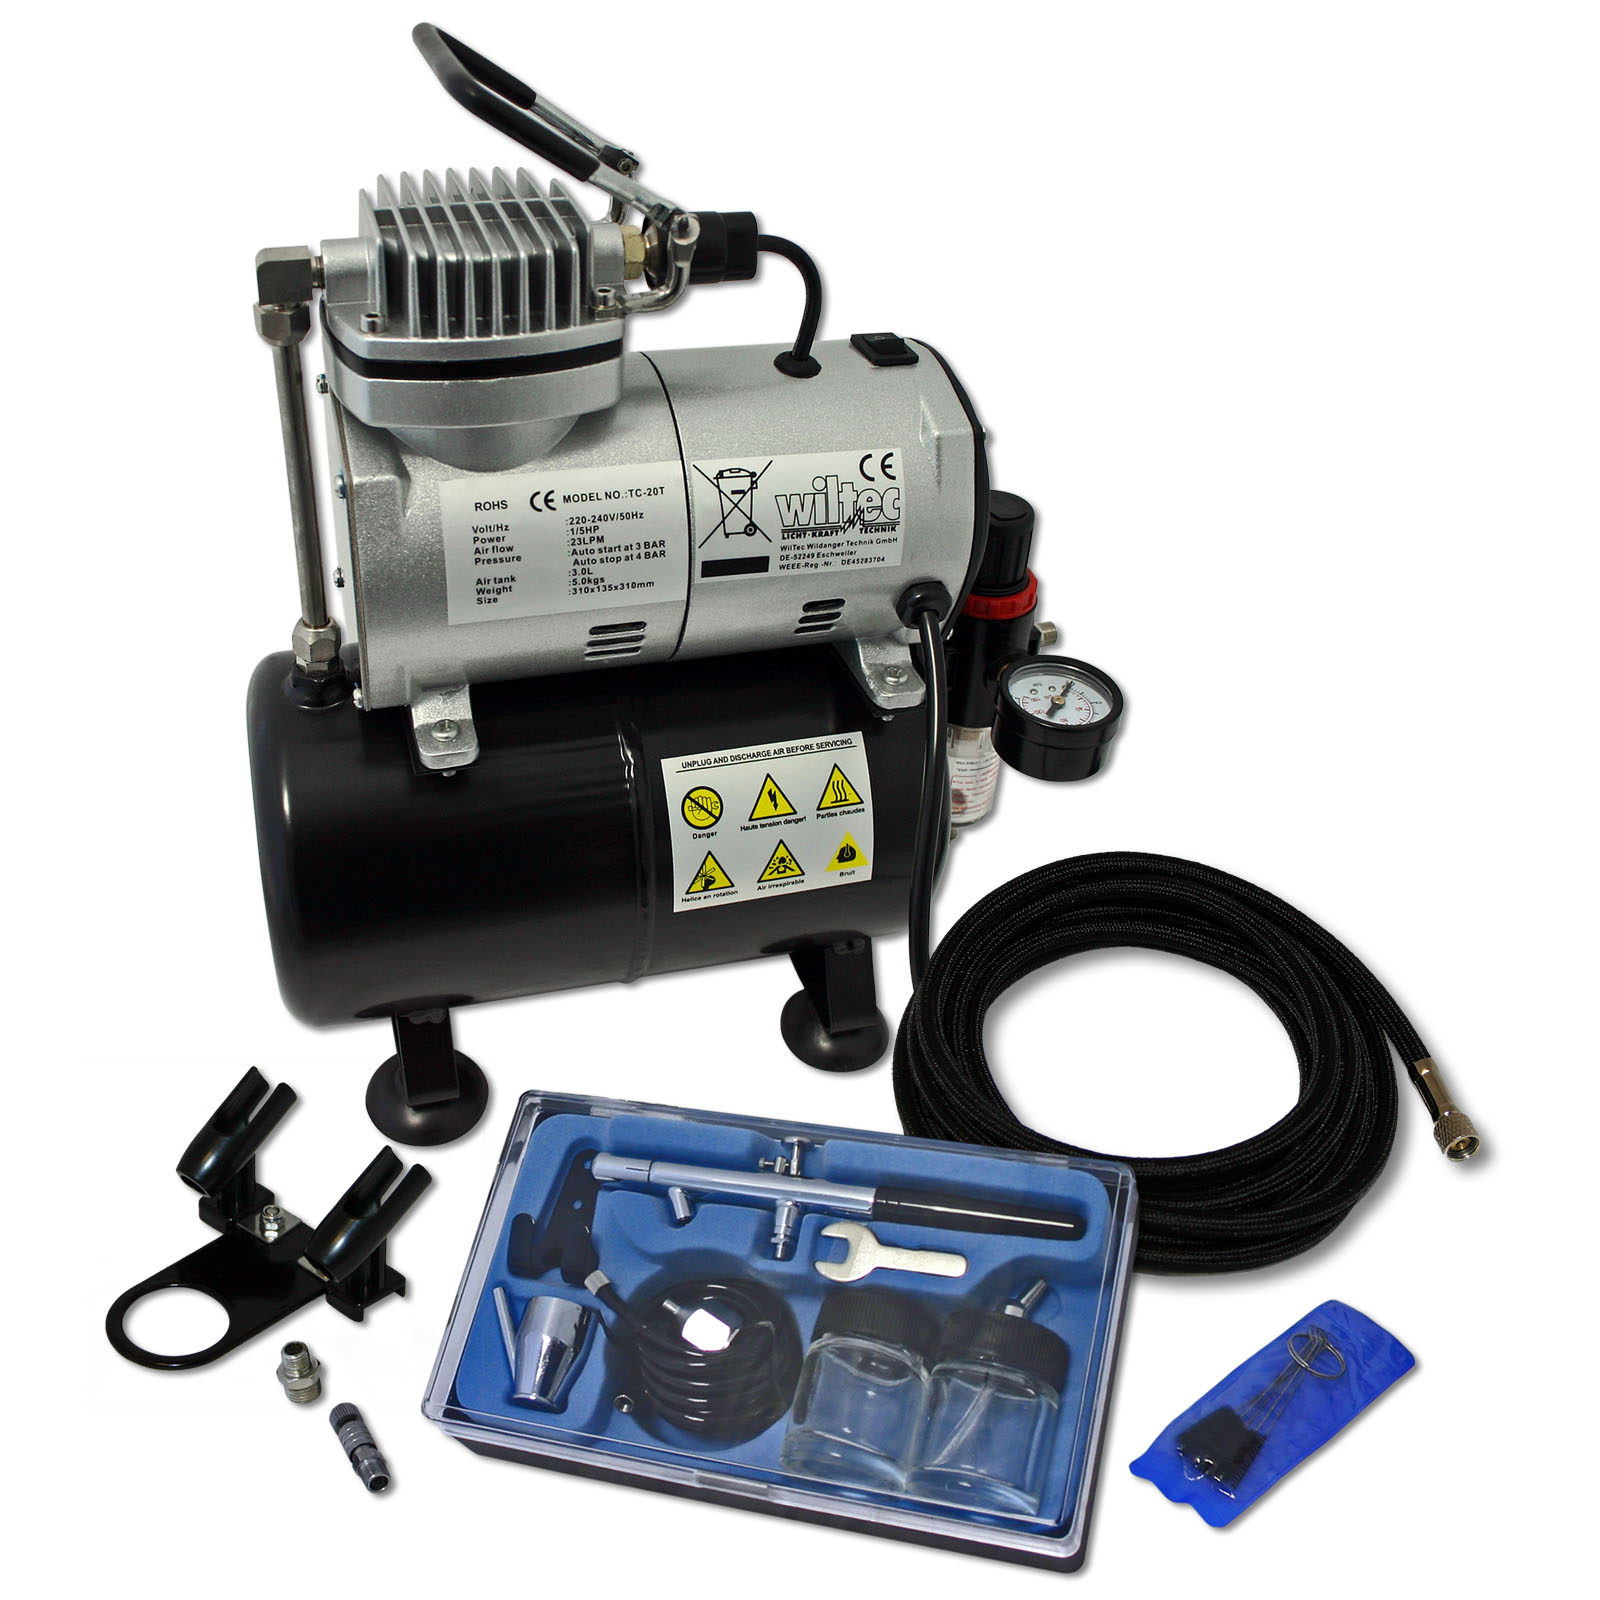 Vigiart 533 AS186K Airbrush Compressor Kit